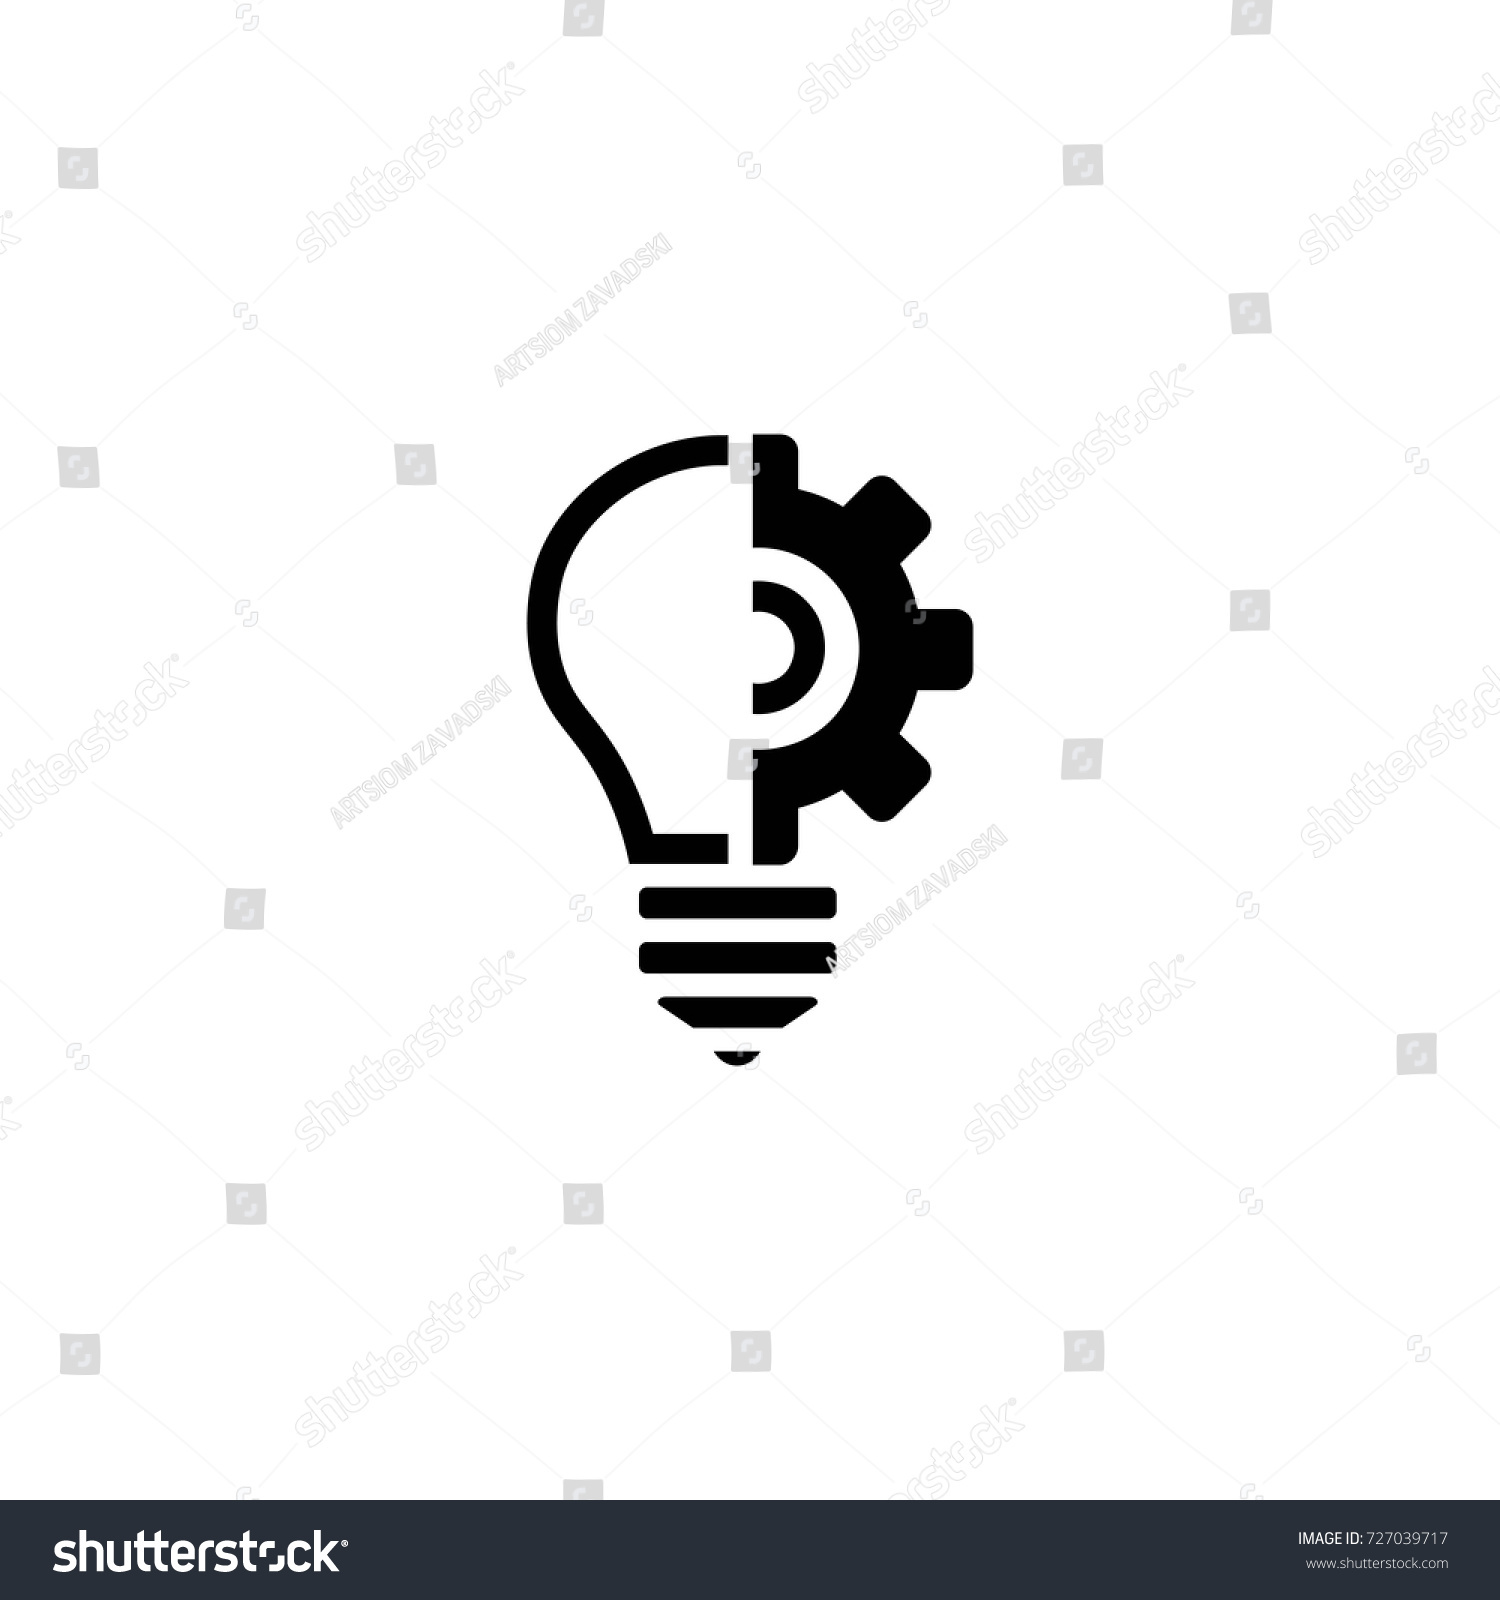 lightbulb vector icon #727039717